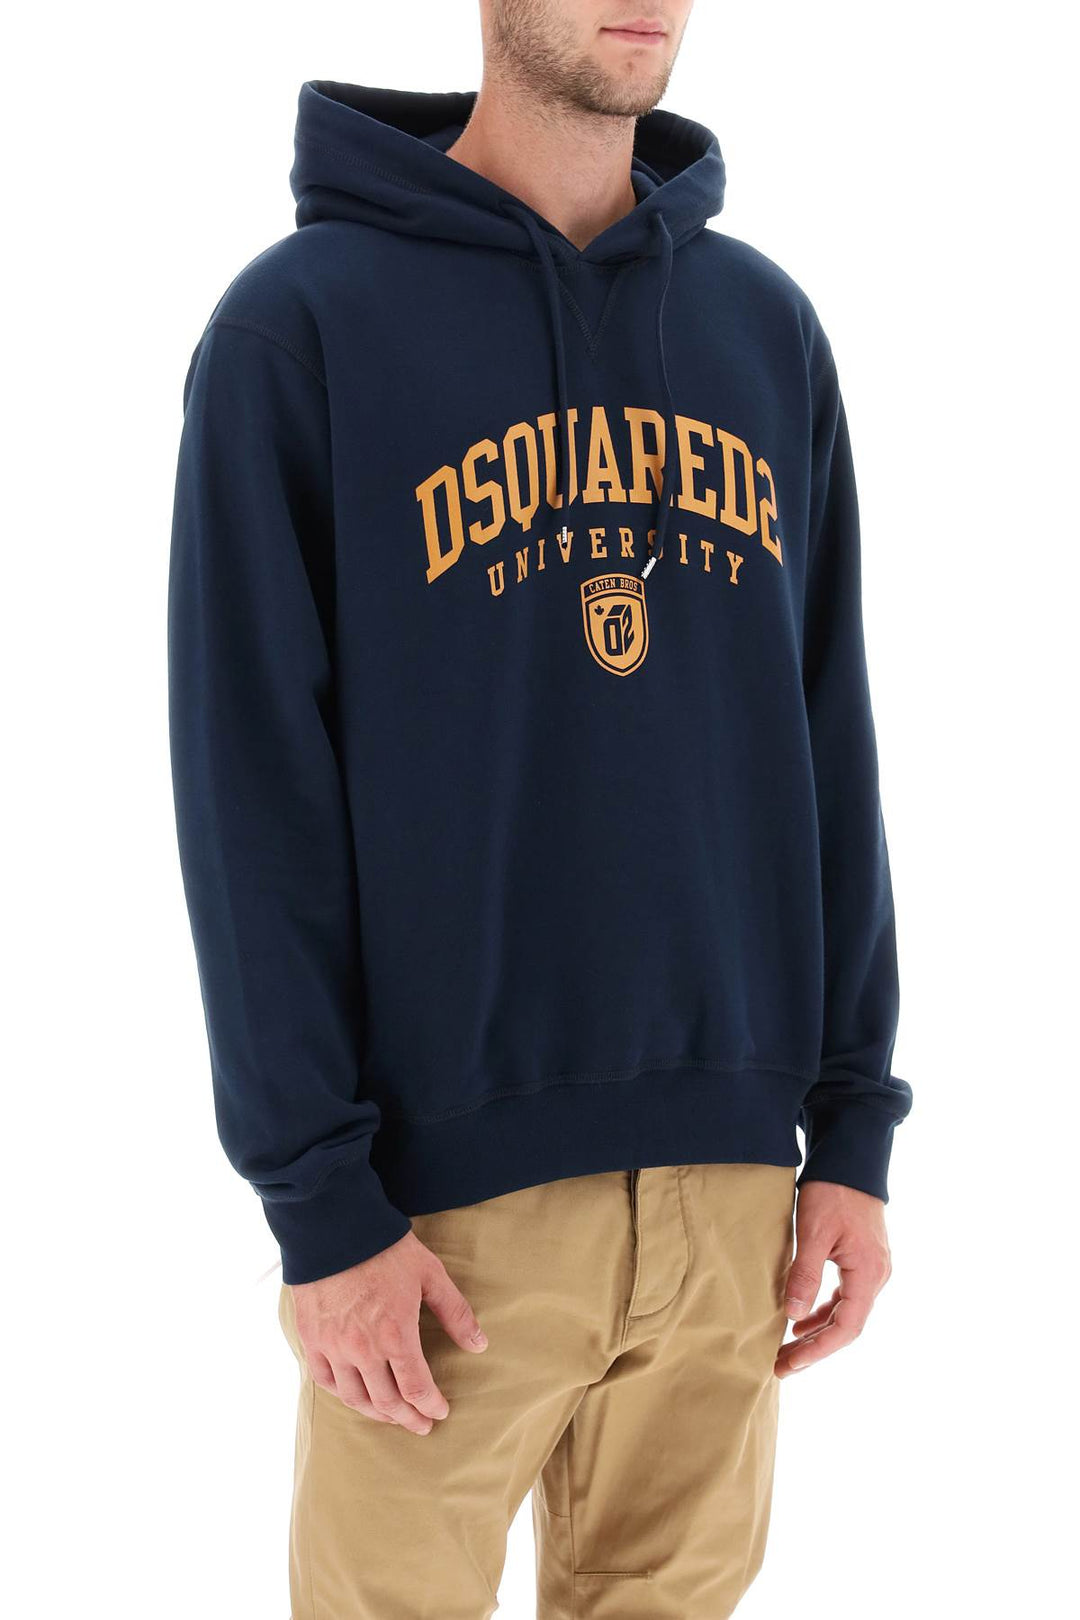 Dsquared2 'University' Cool Fit Hoodie   Blu